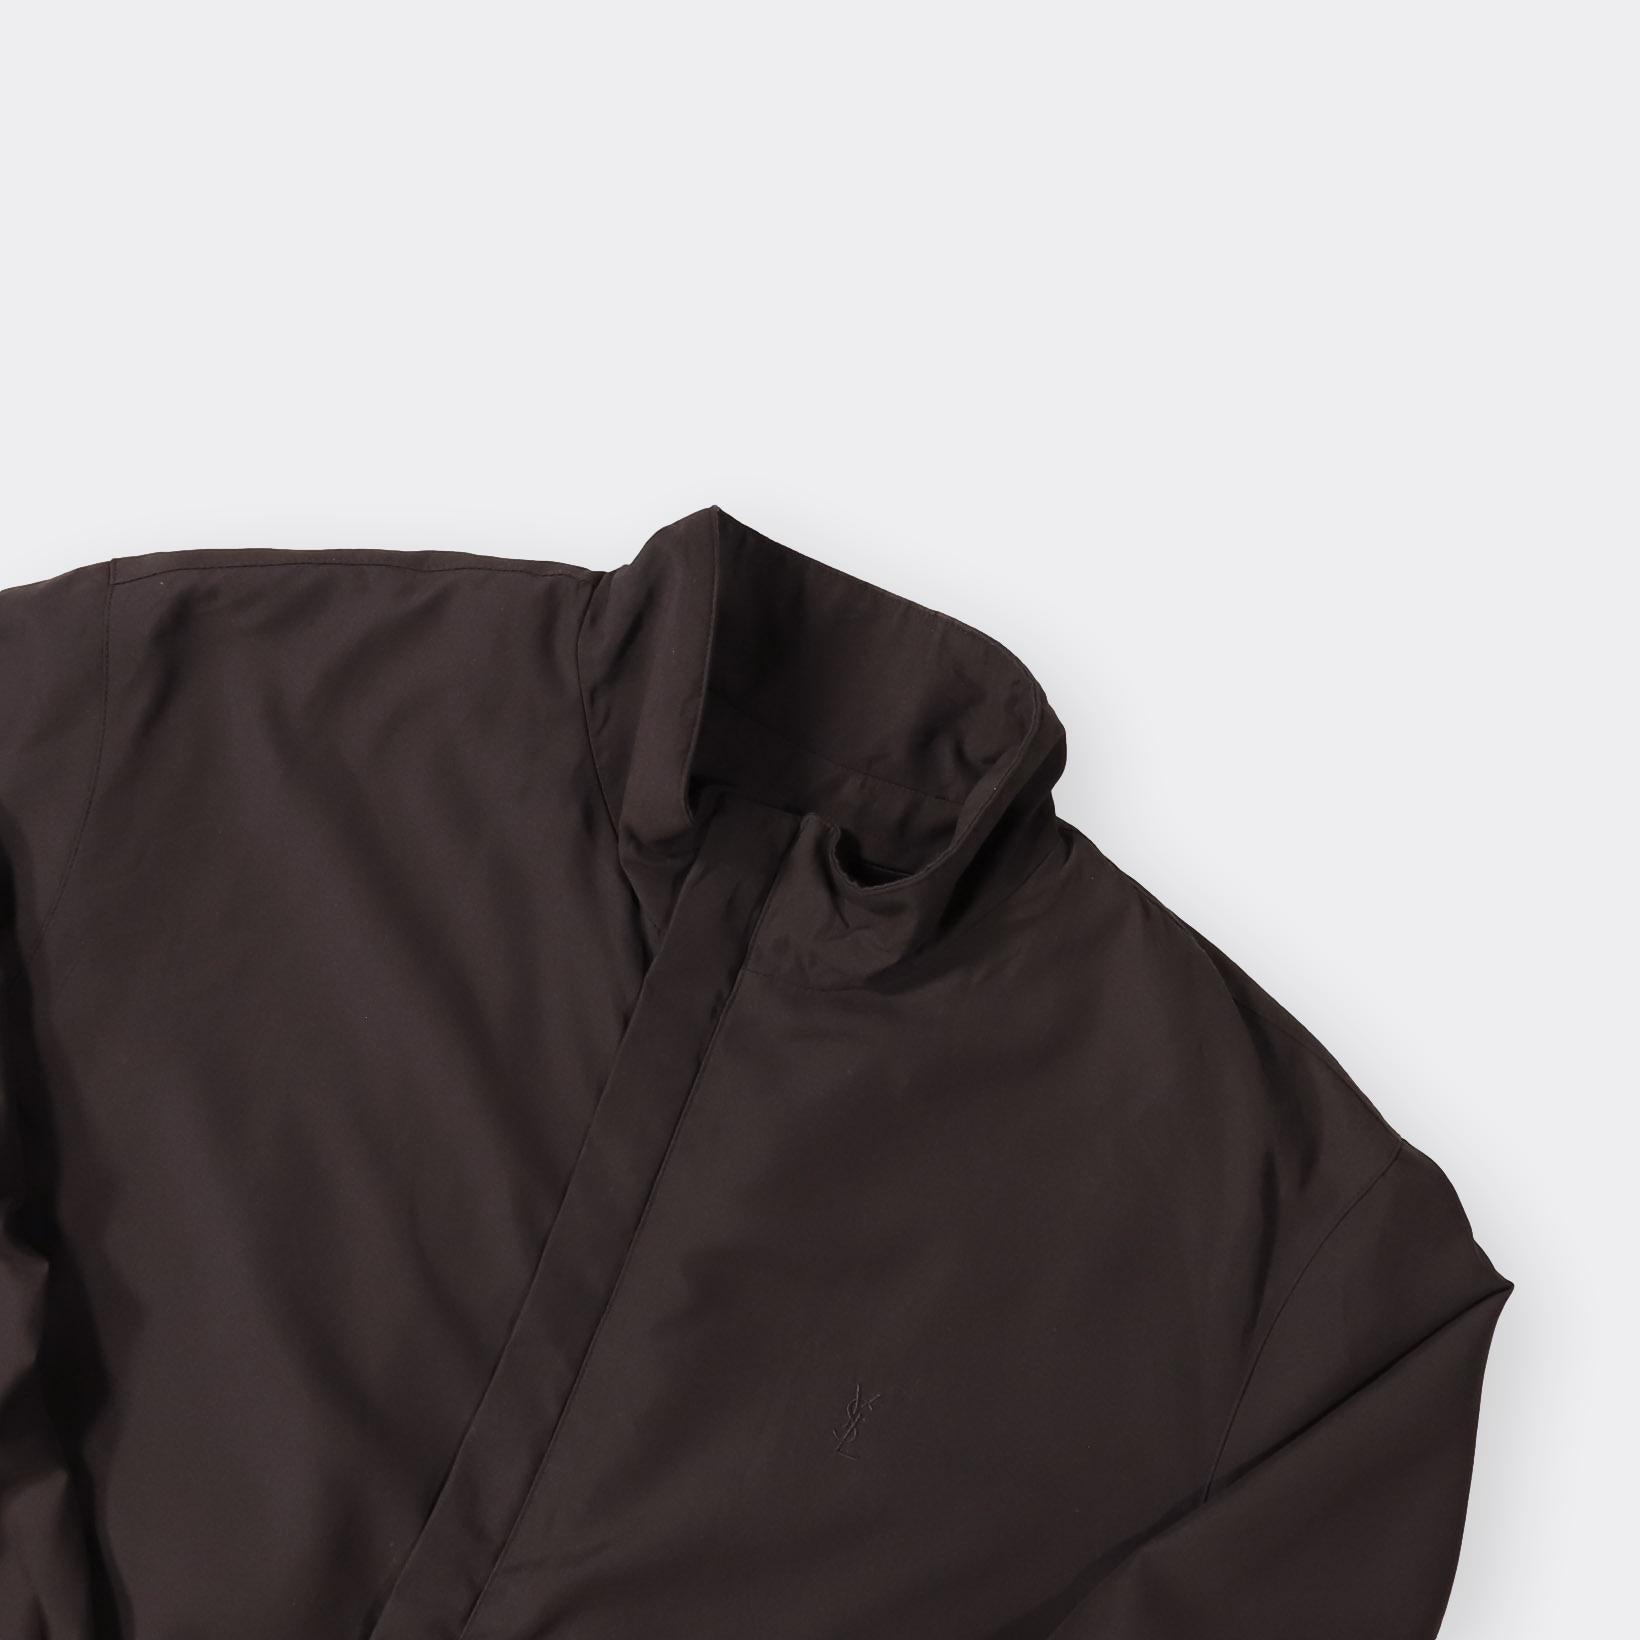 Yves Saint Laurent Vintage Coat - Small - Known Source